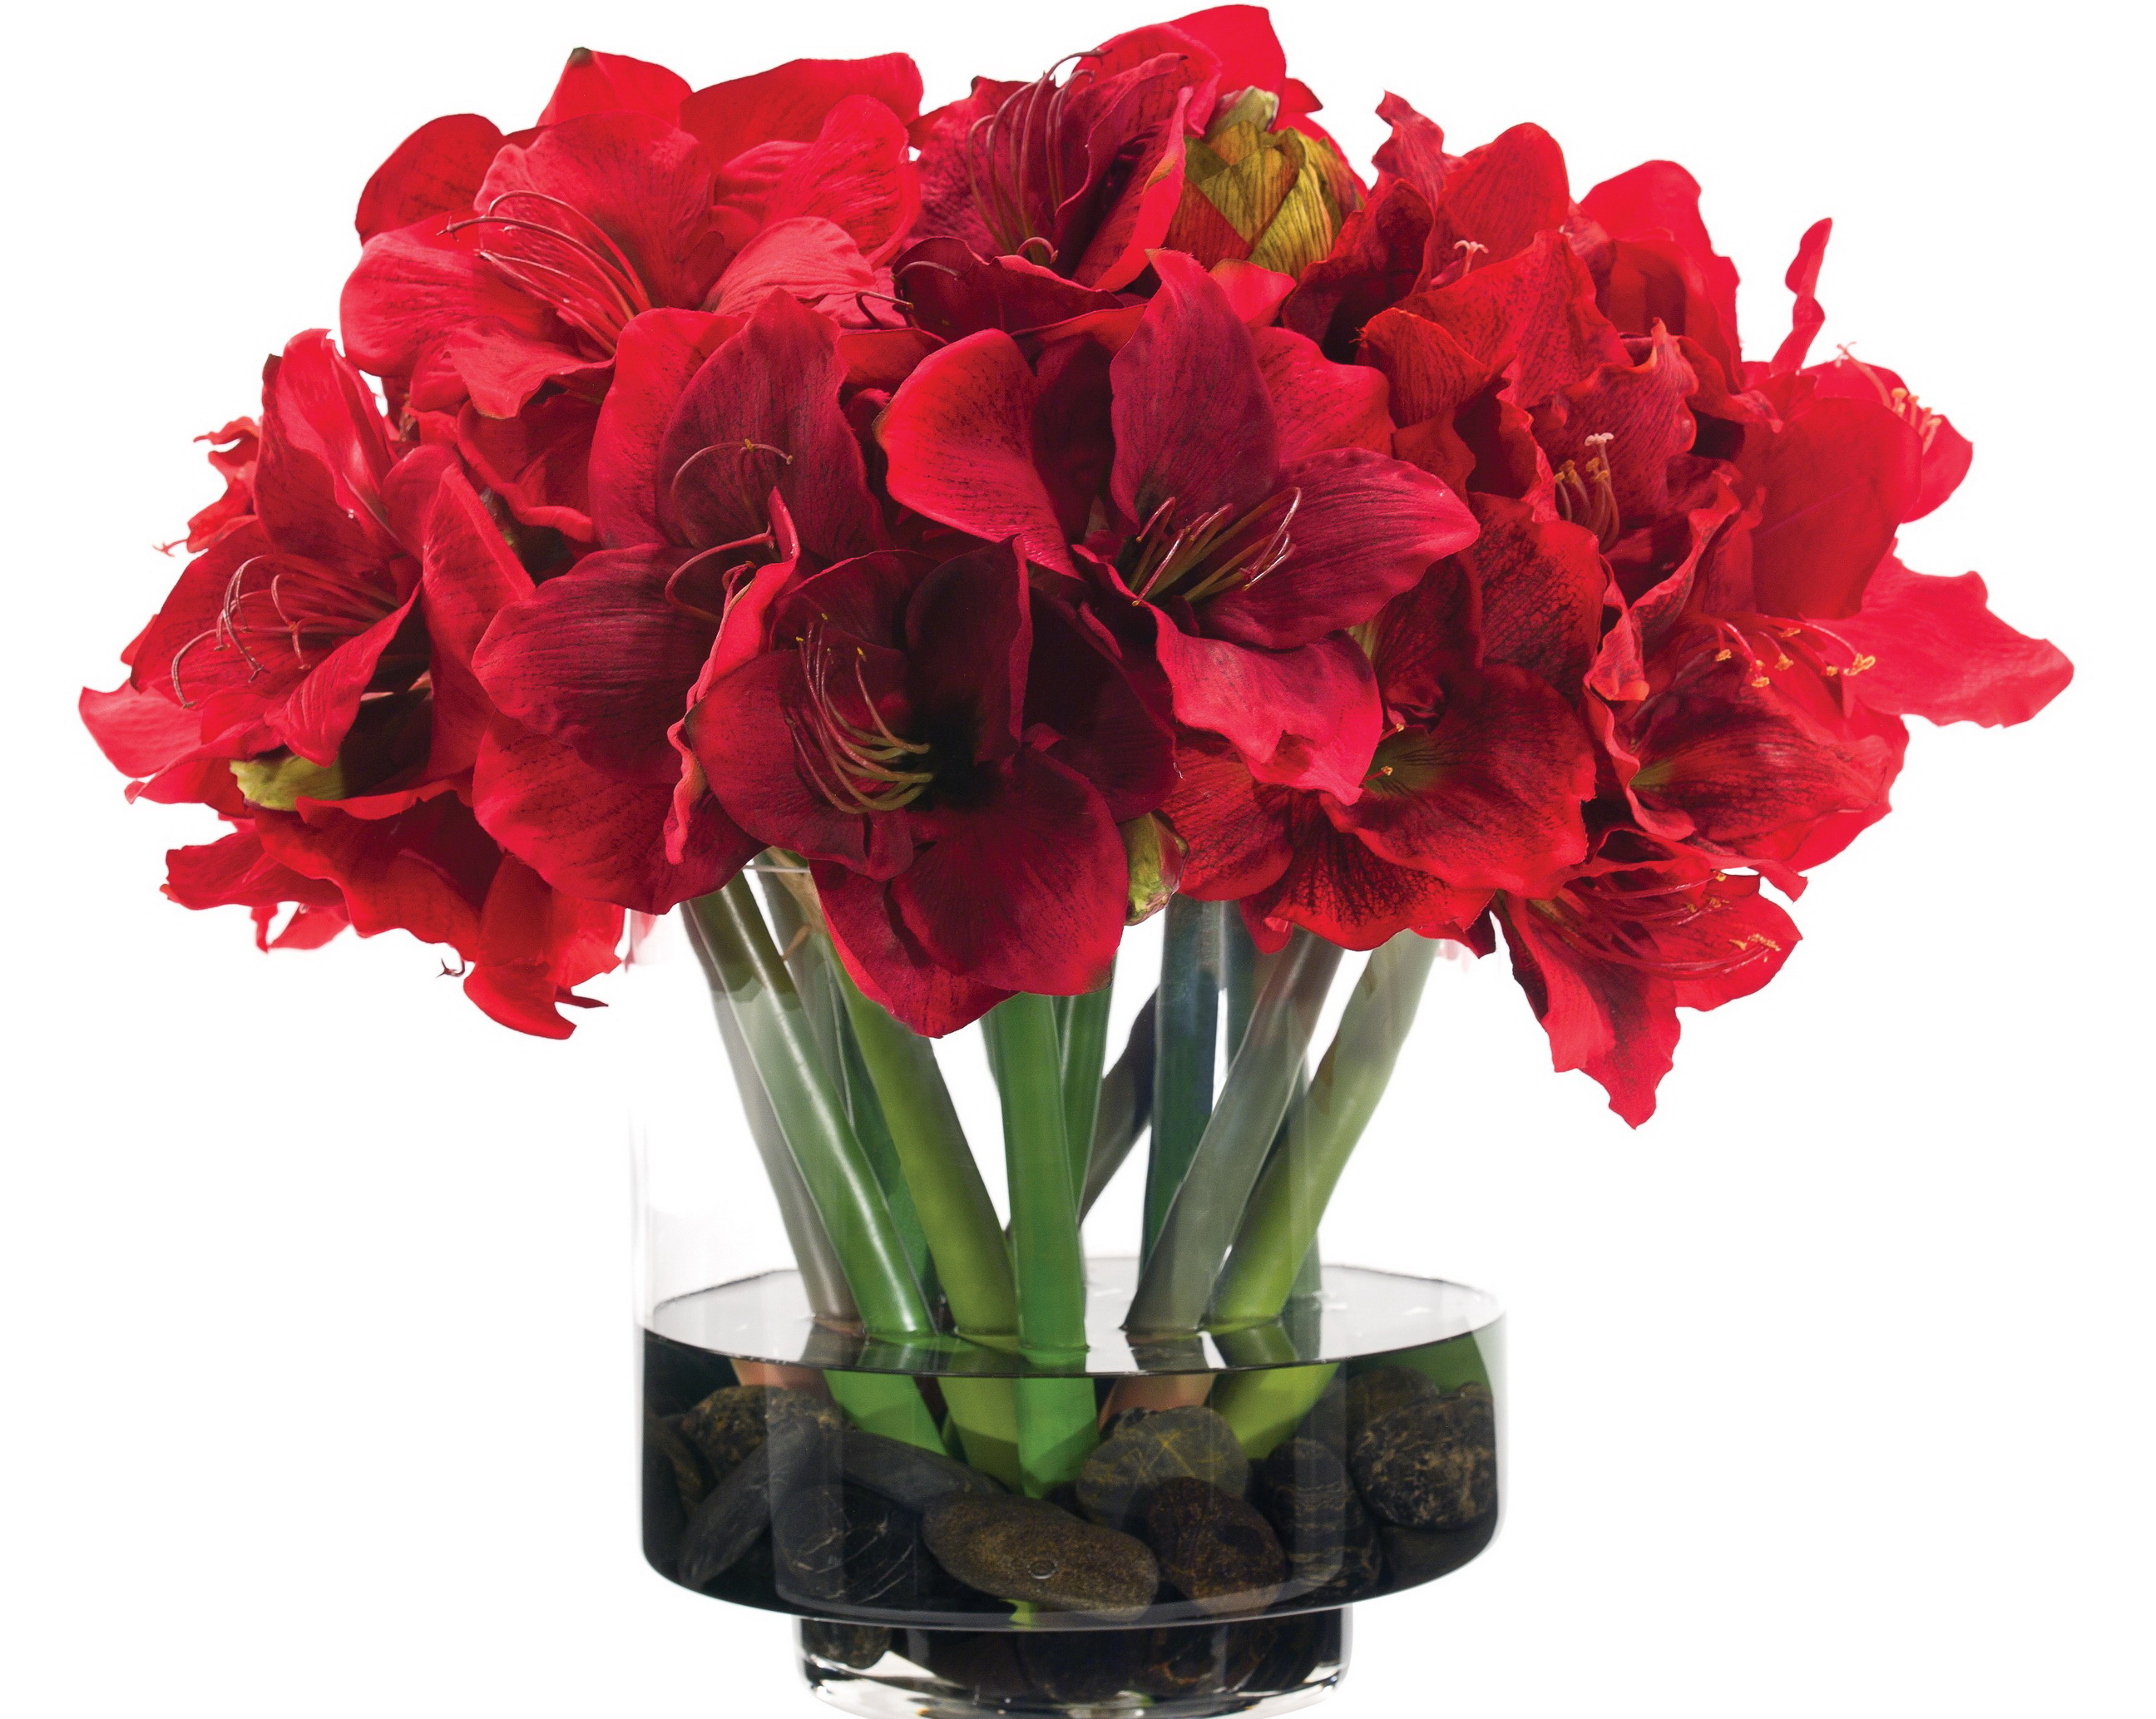 Foto Röd blomma Amaryllis 2592x2067 Blommor